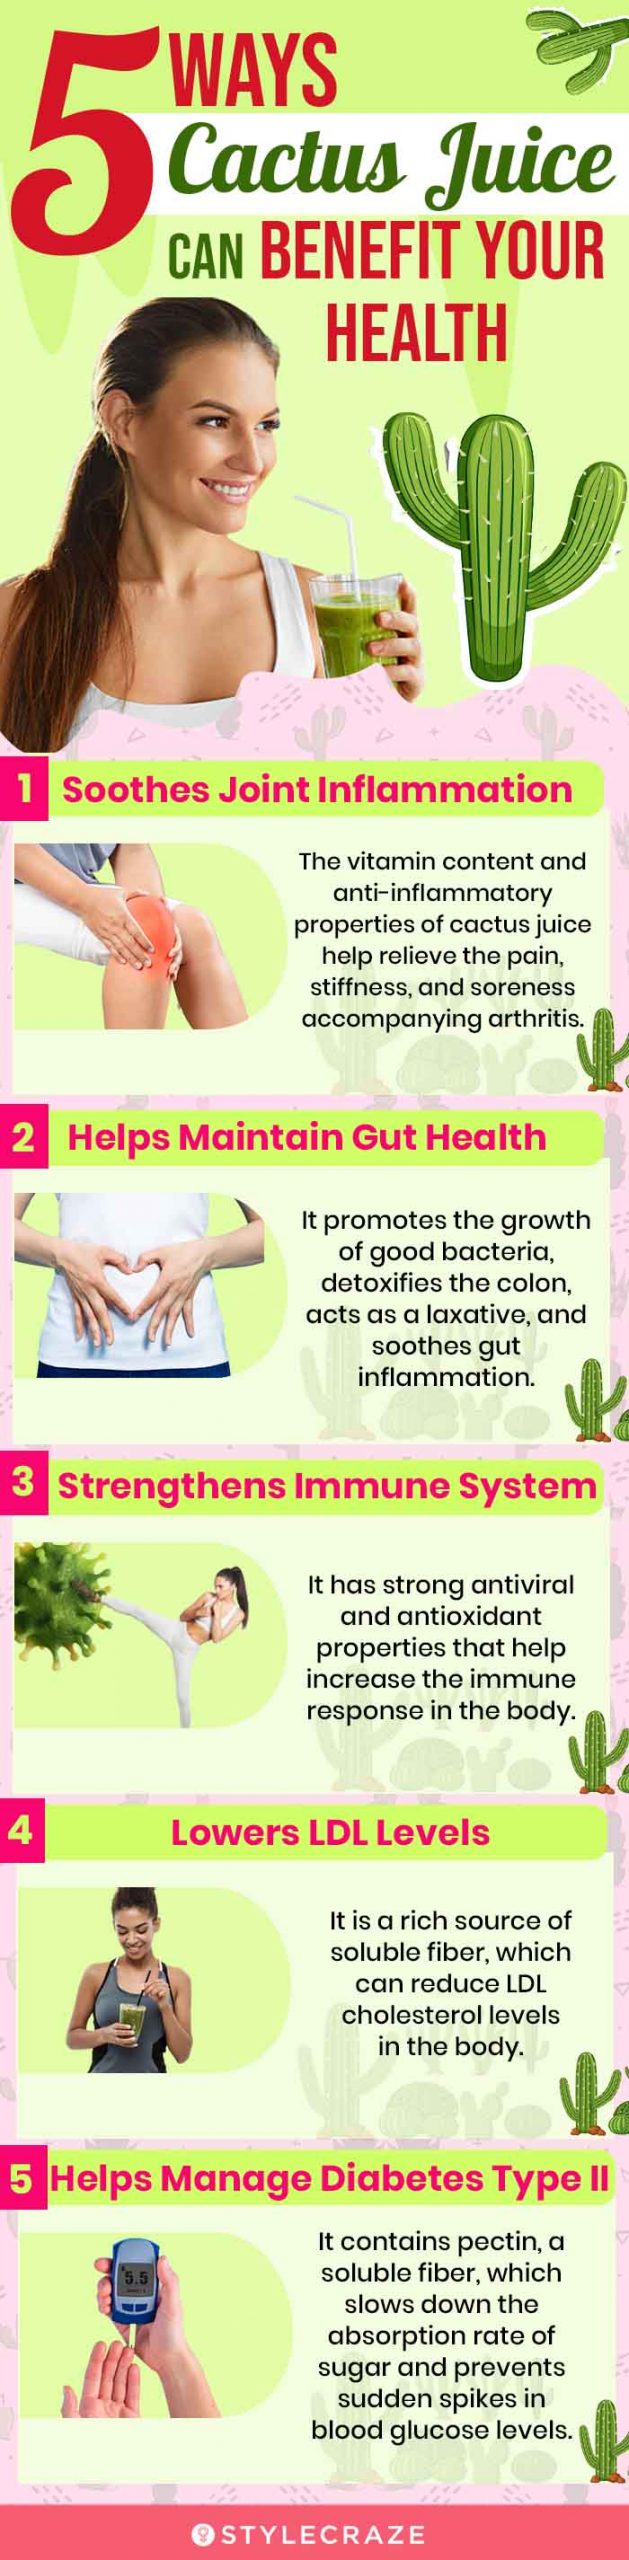 5 ways cactus juice can benefit your health (infographic)